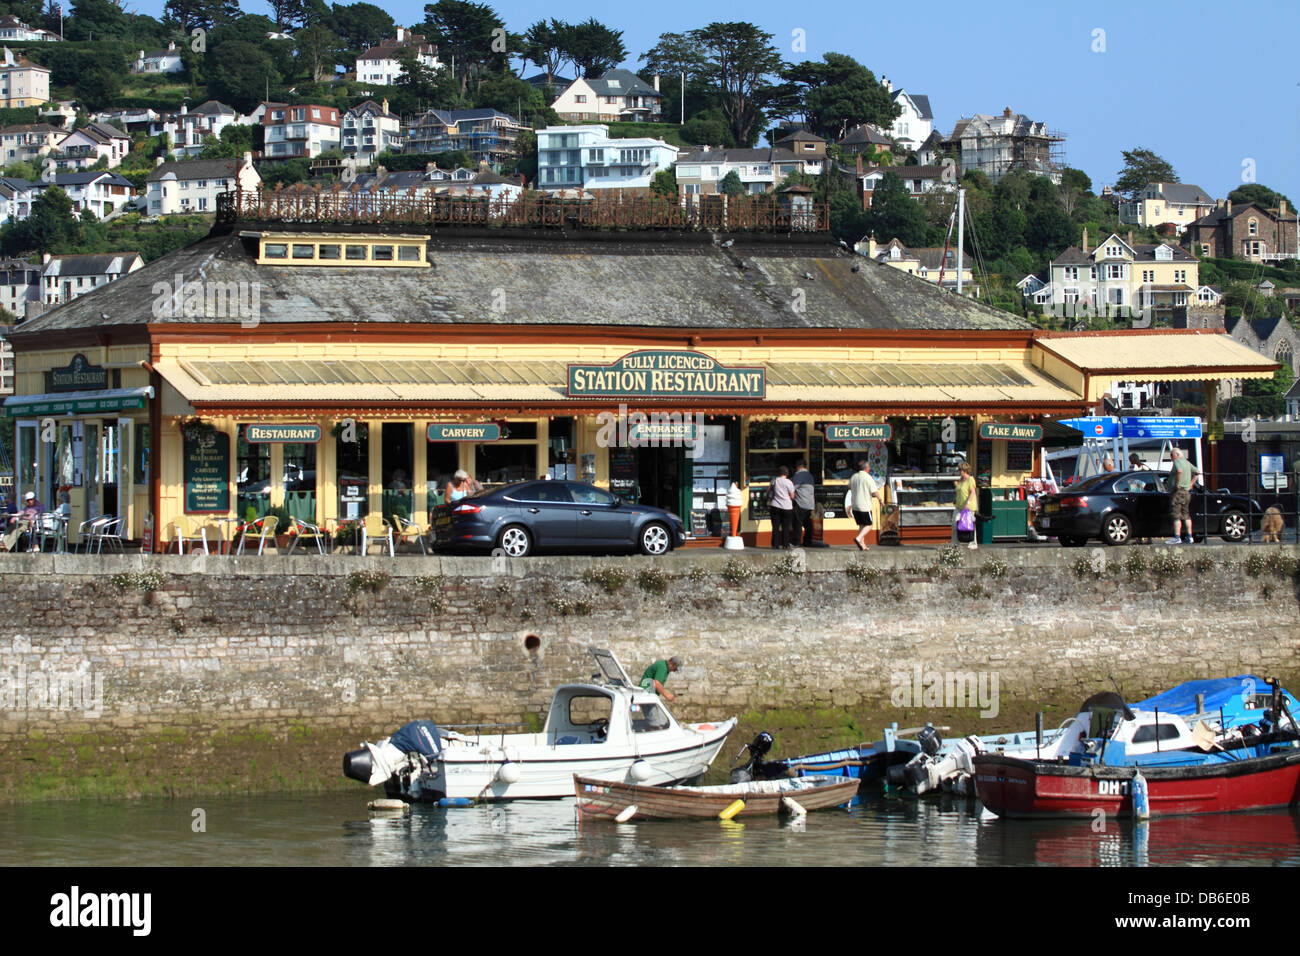 The 'Station' restaurant on the embankment in Dartmouth, Devon, England, UK. Stock Photo